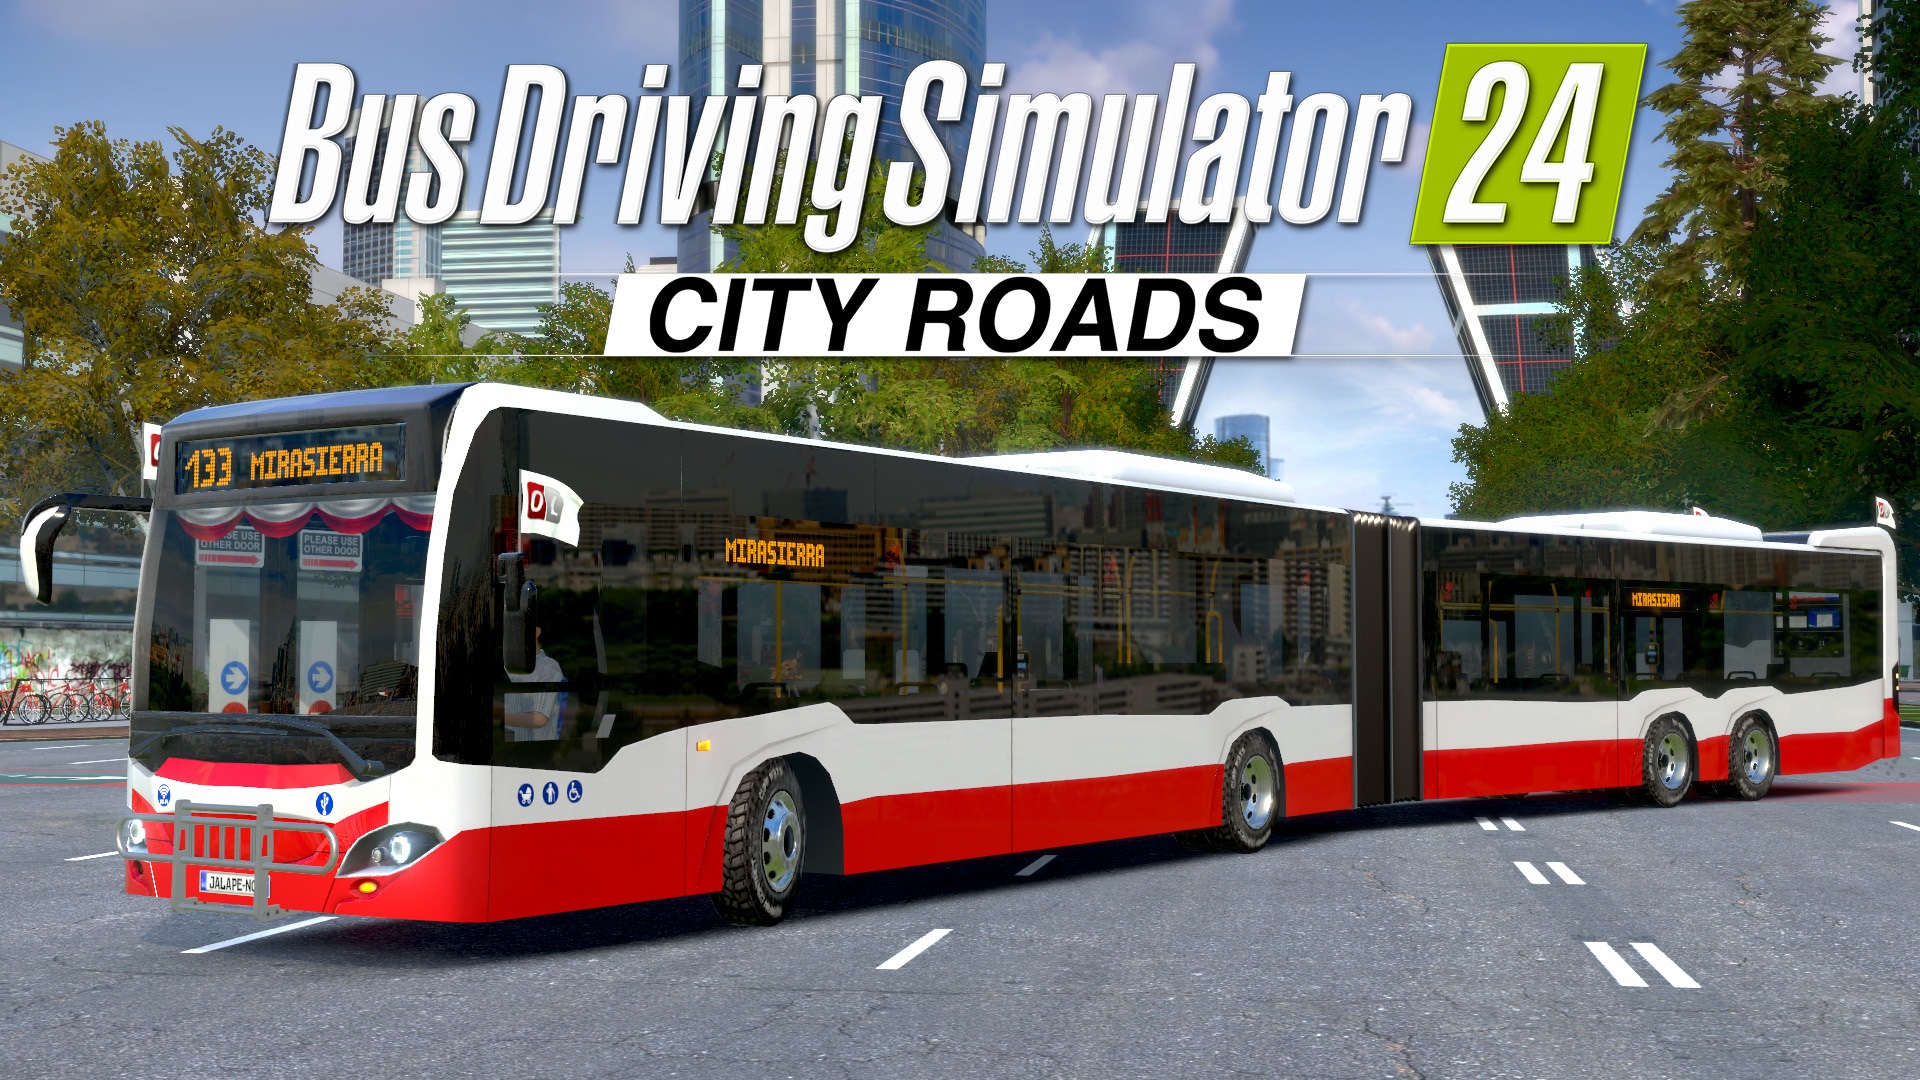 Bus Driving Simulator 24 - City Roads DLC Articulated Bus